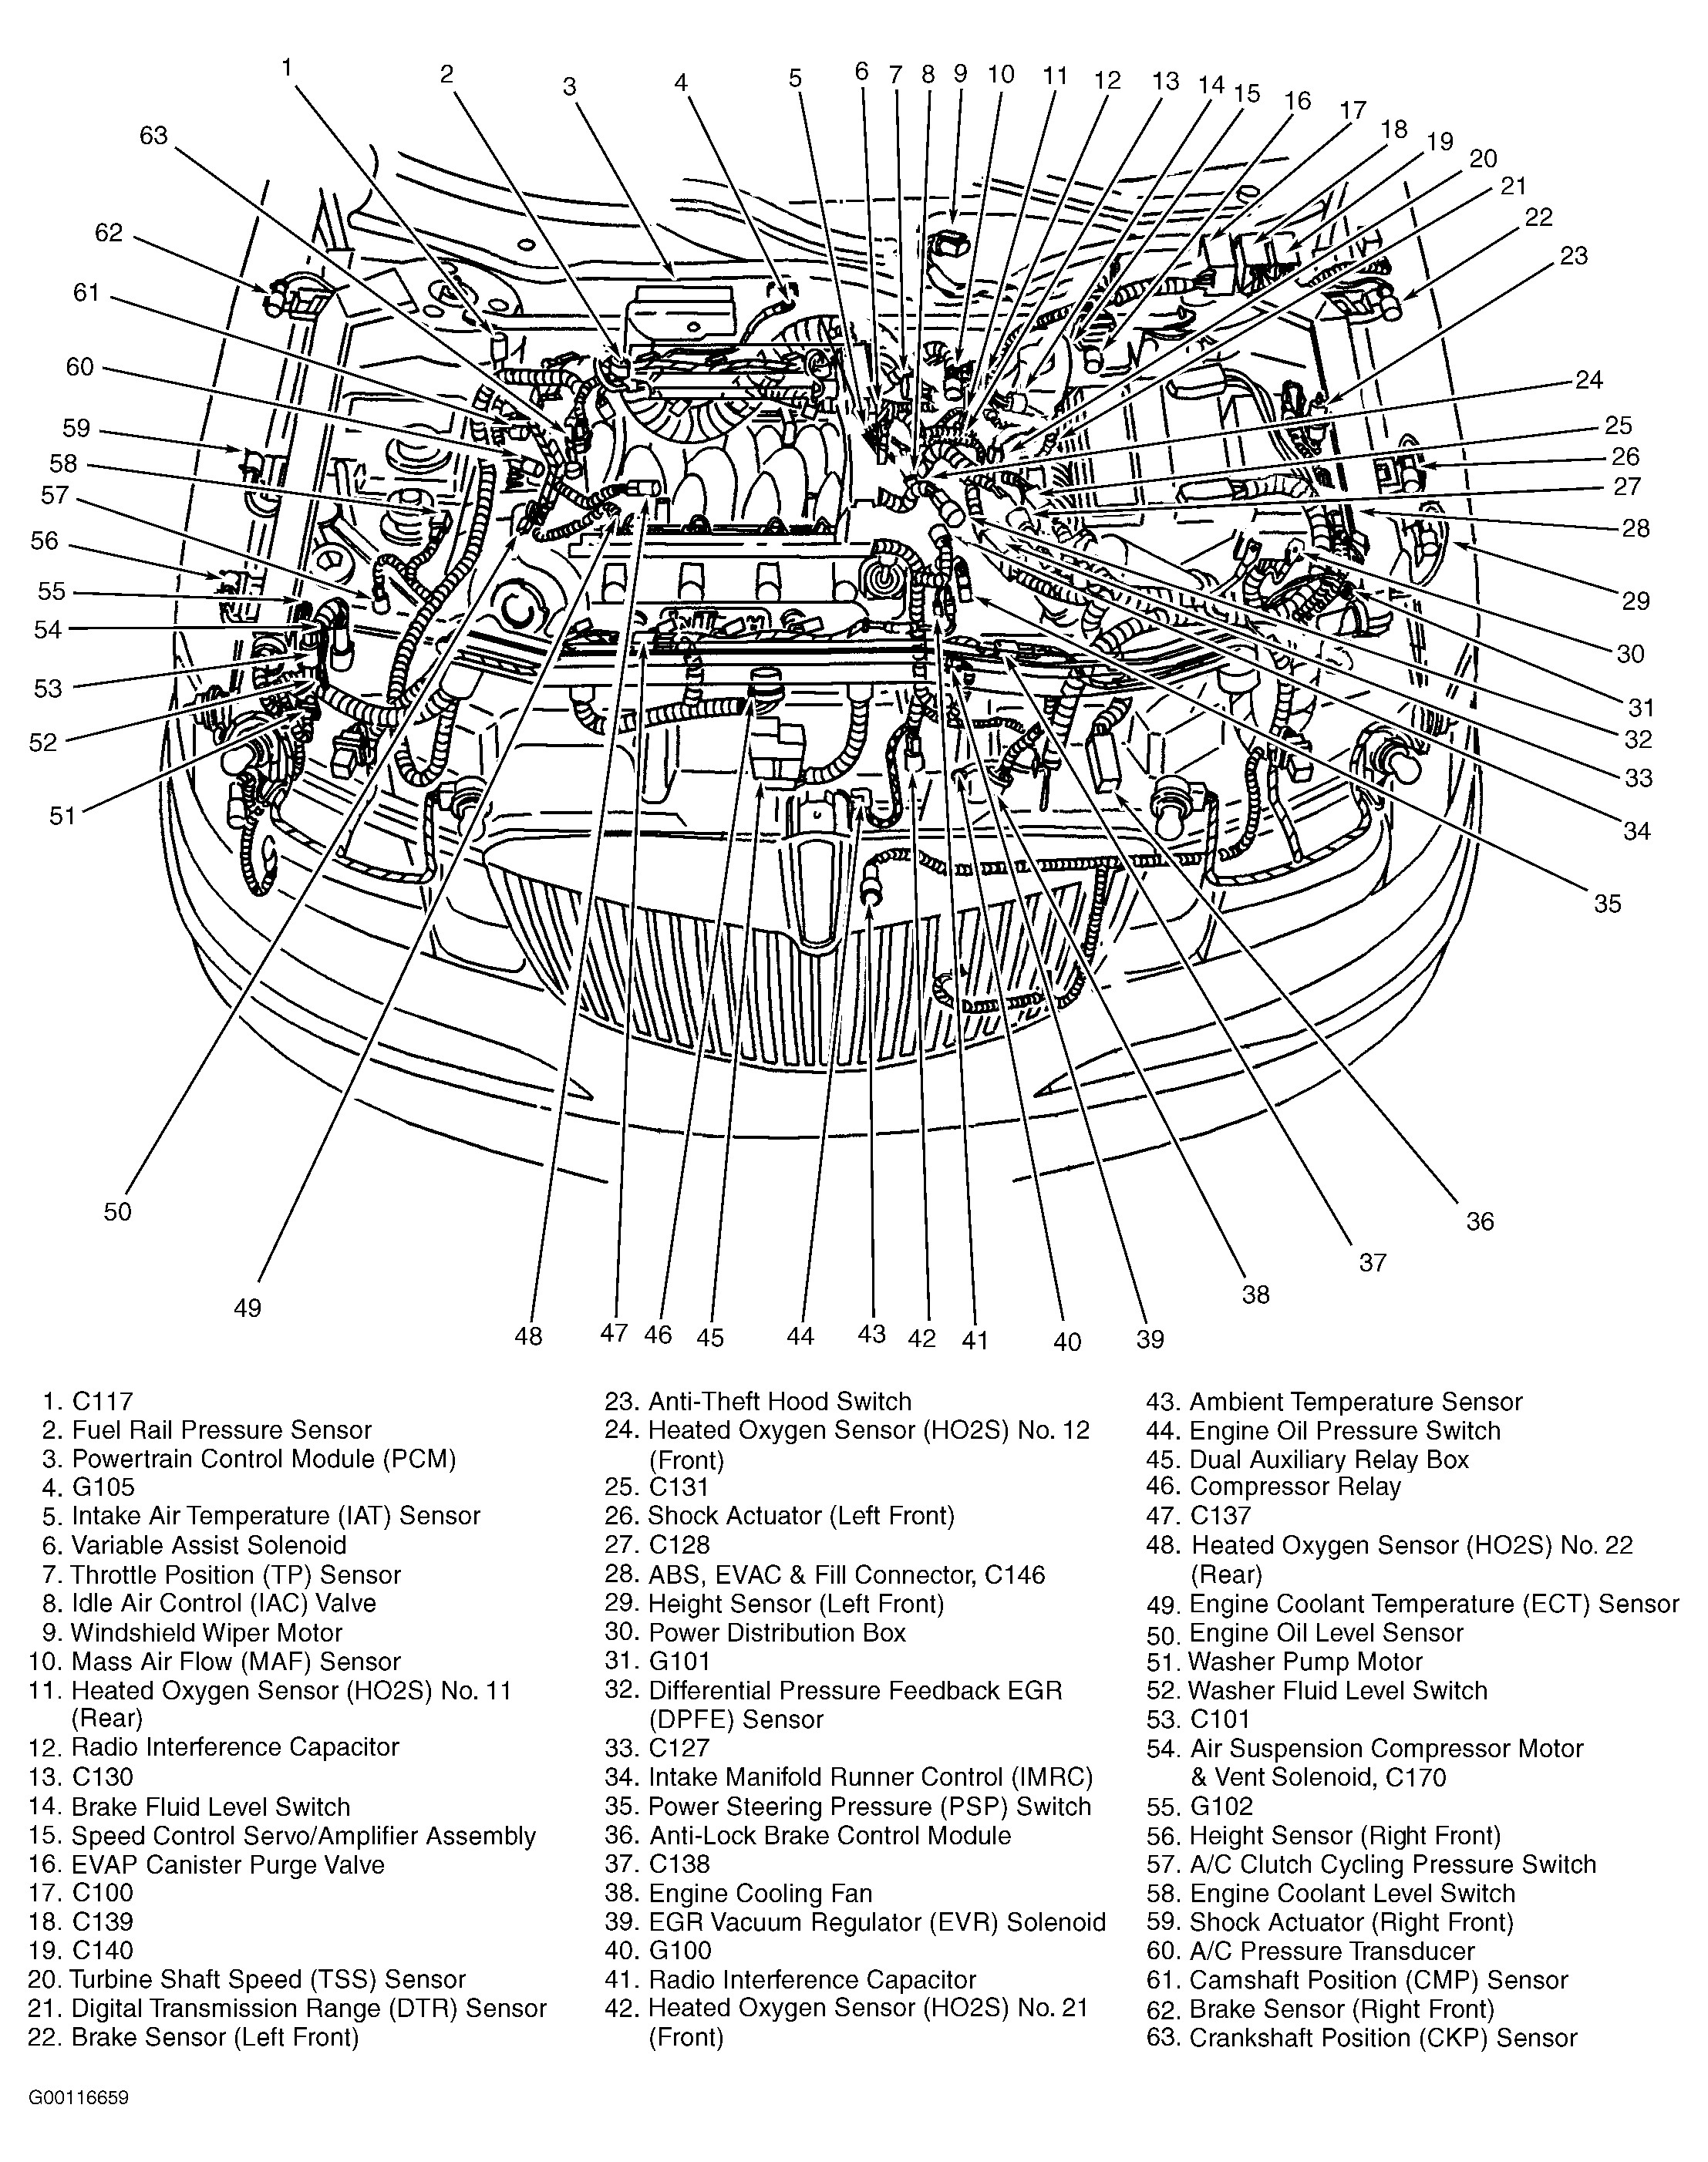 1999 Lincoln town Car Engine Diagram 1964 Lincoln Continental Wiring Diagram 1964 Lincoln Continental Of 1999 Lincoln town Car Engine Diagram